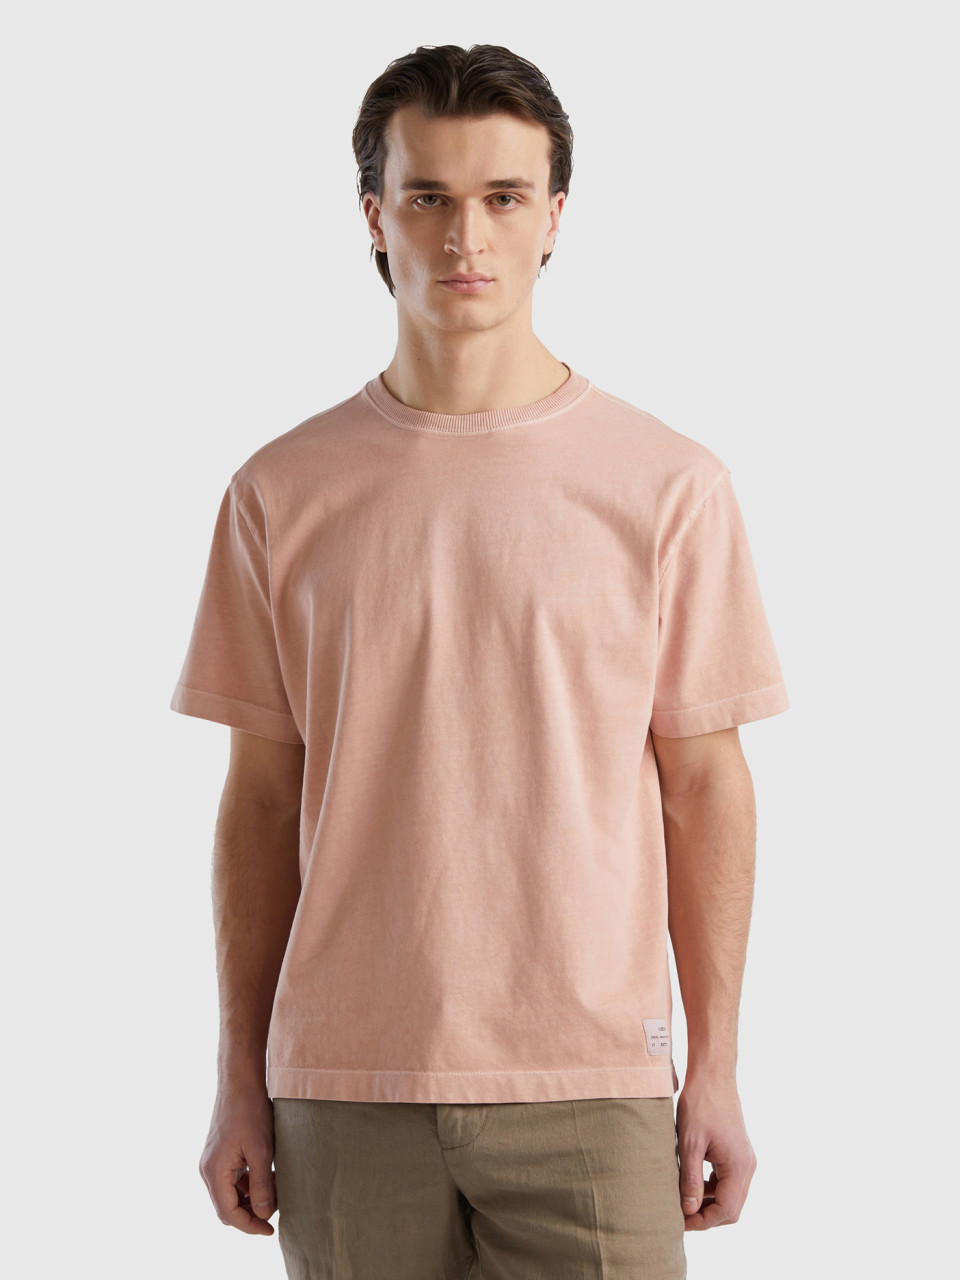 Benetton, 100% Organic Cotton Crew Neck T-shirt, Nude, Men